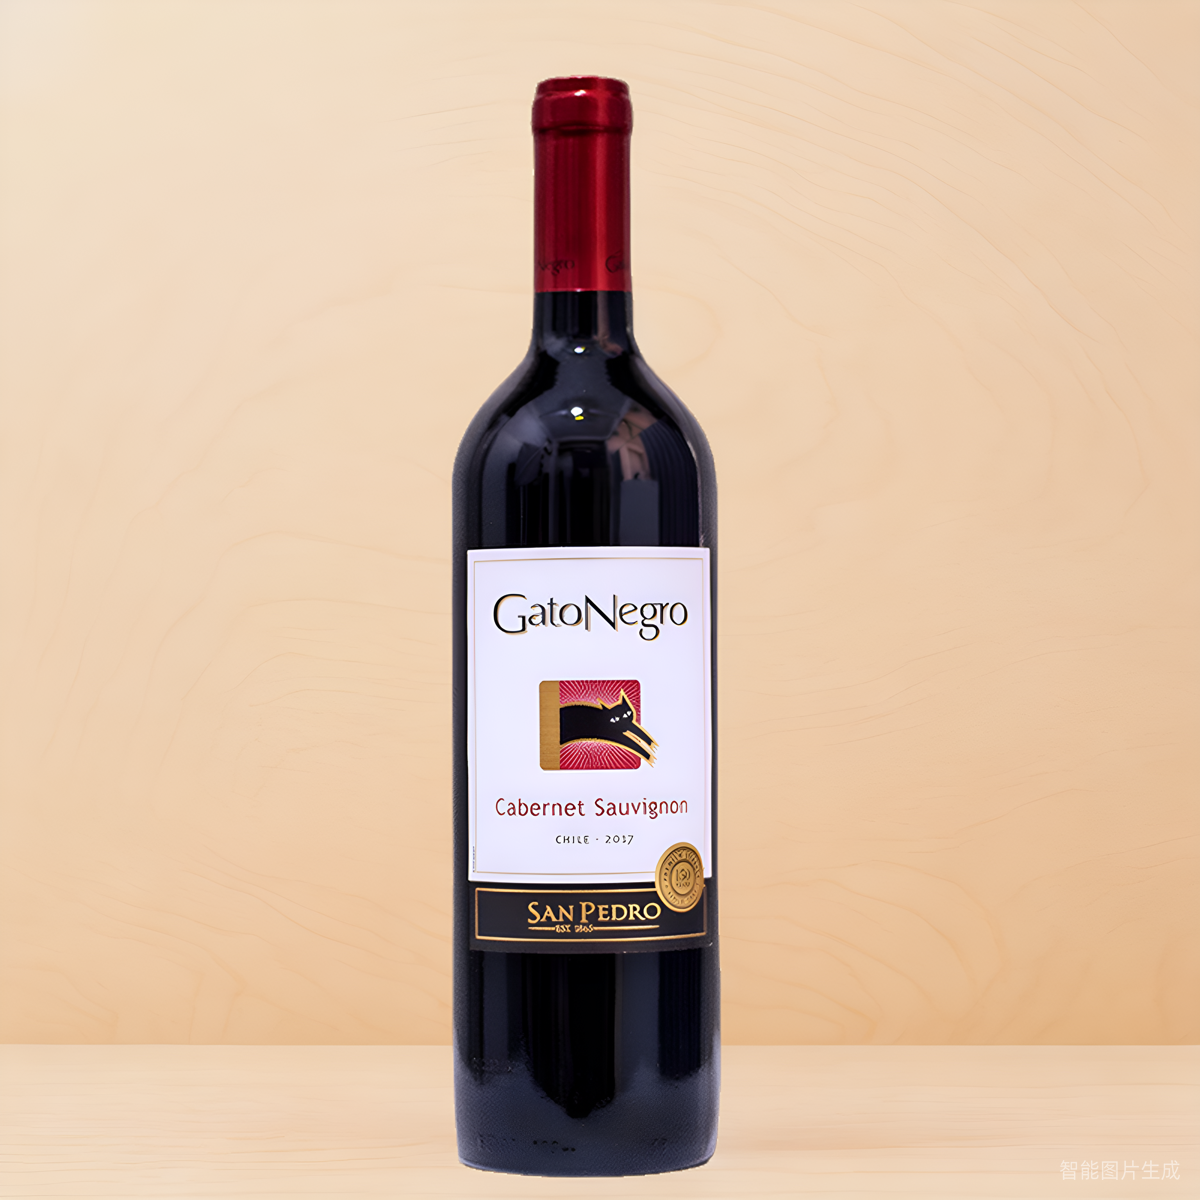 gatonegro黑猫赤霞珠干红葡萄酒2017年份智利原瓶进口红酒750mL-封面